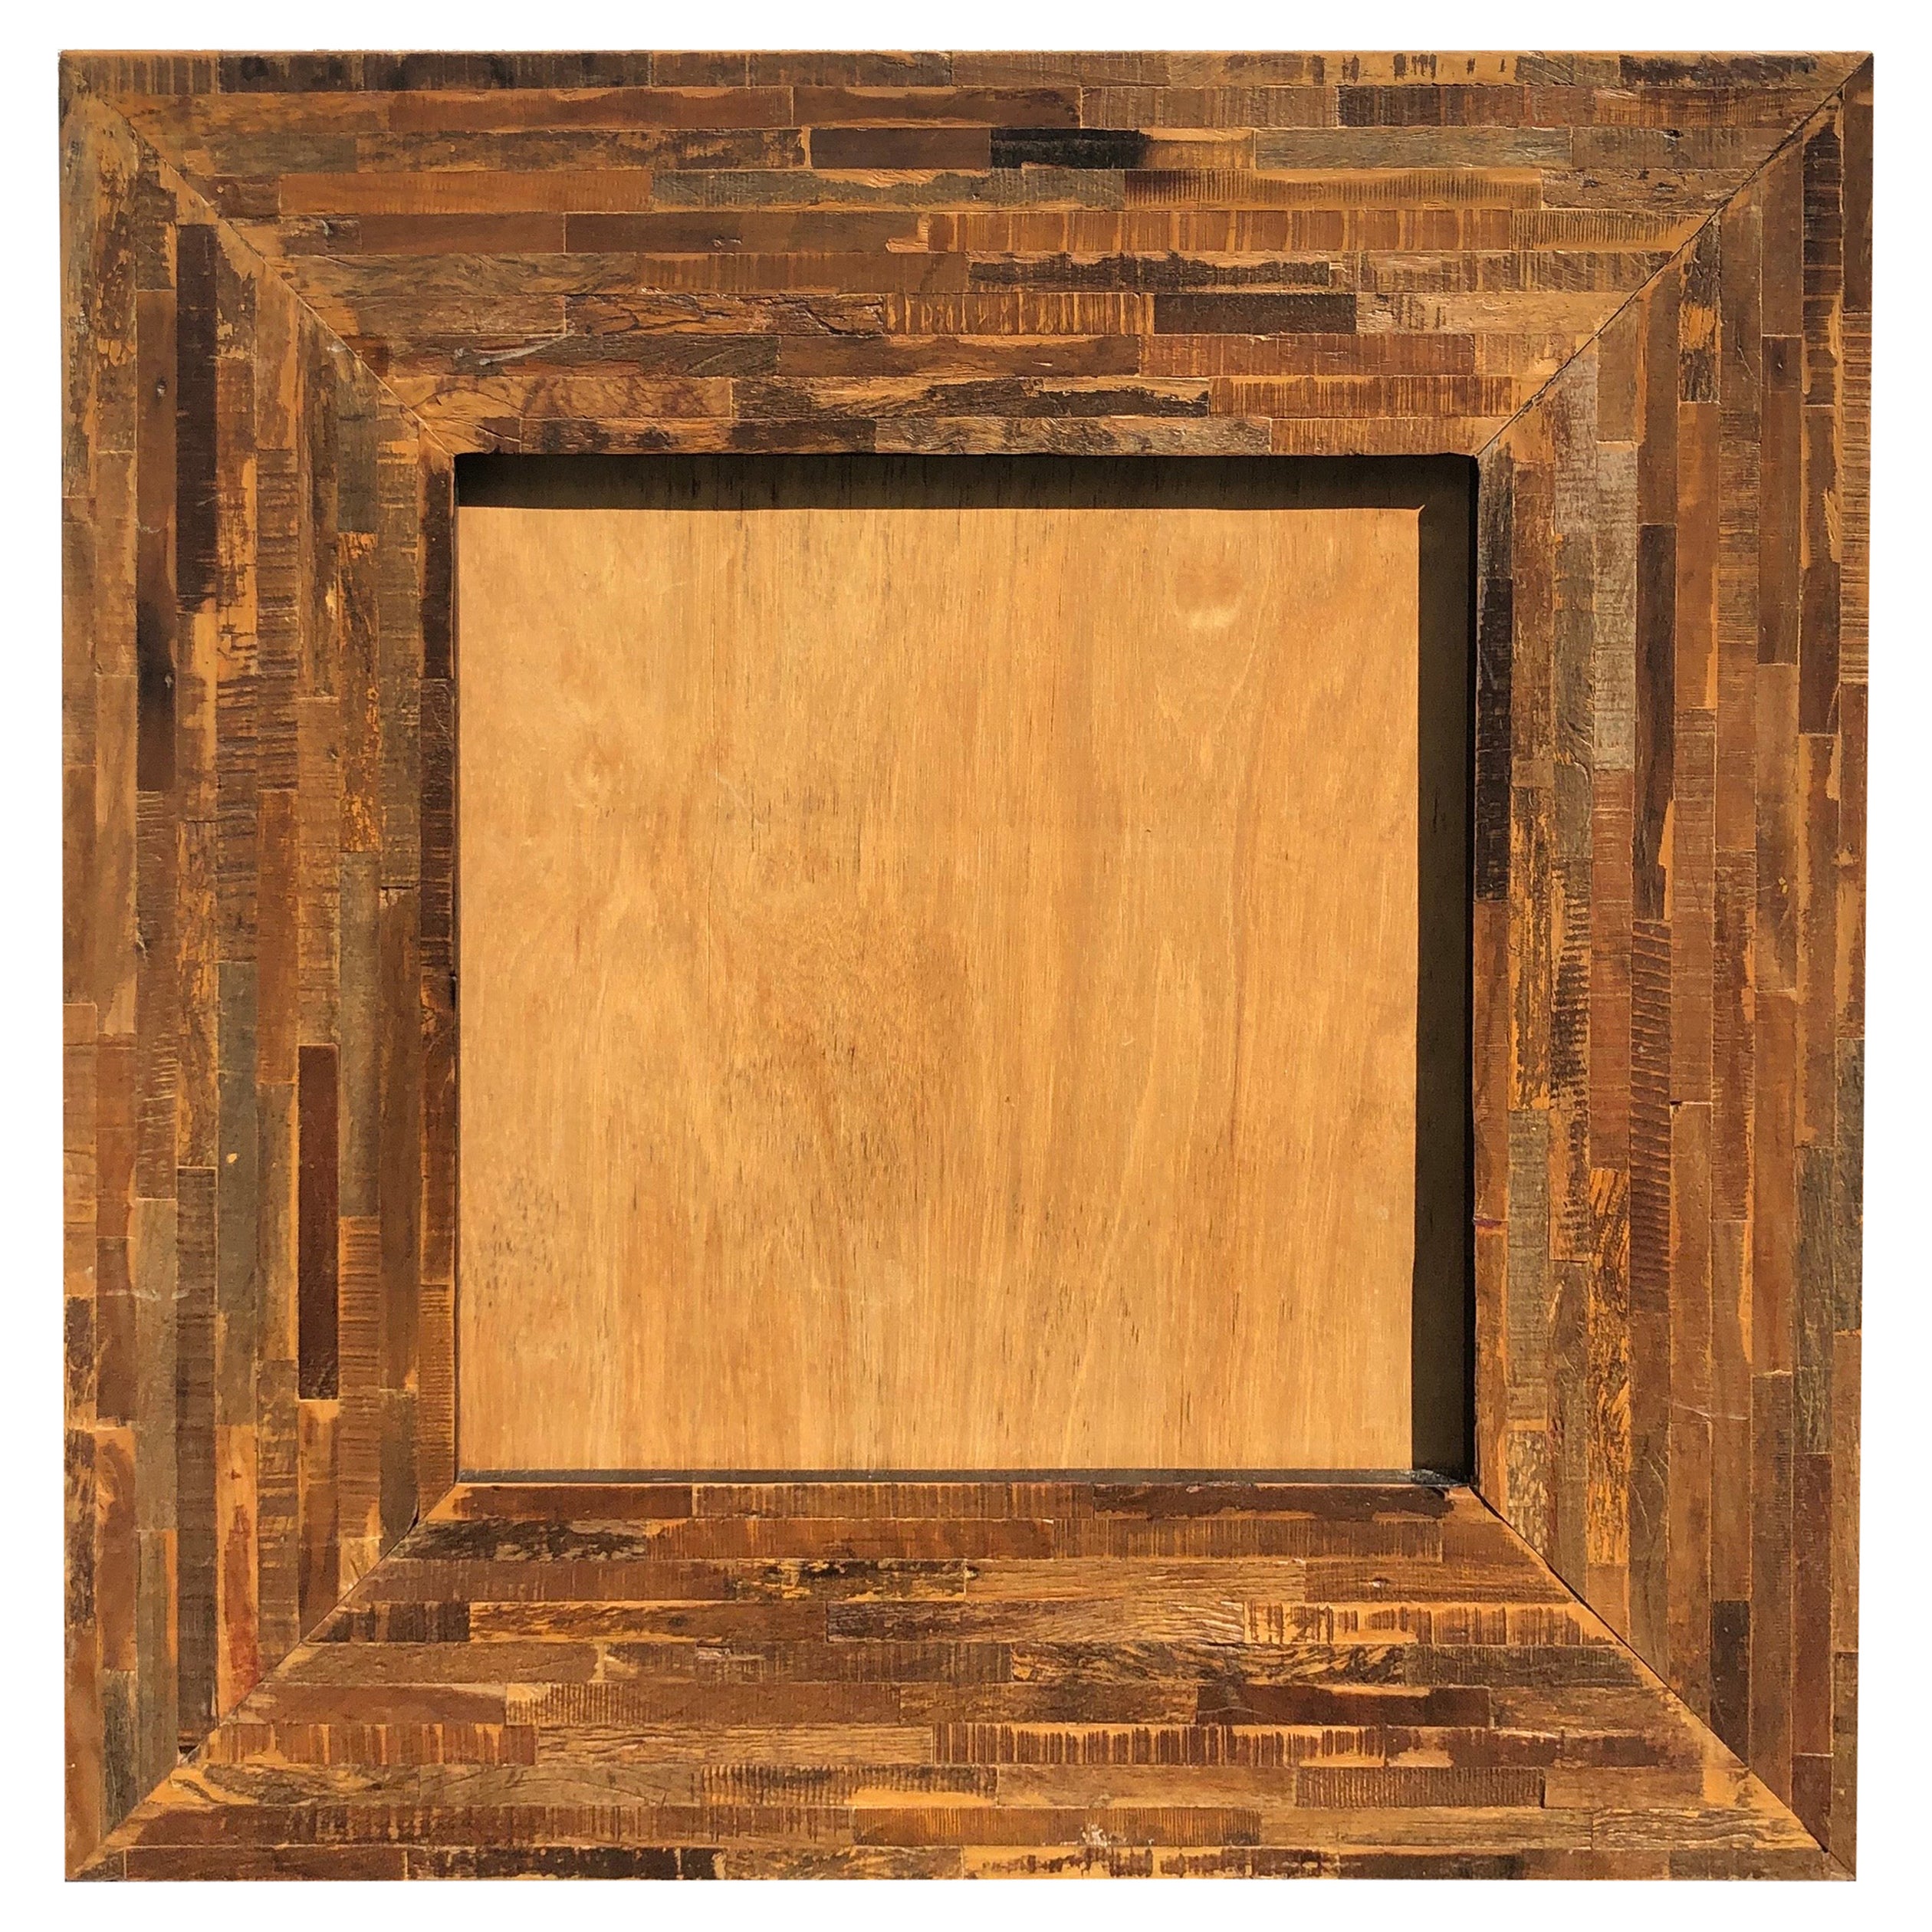 Huge Square Wooden Frame for a large Mirror or Artwork